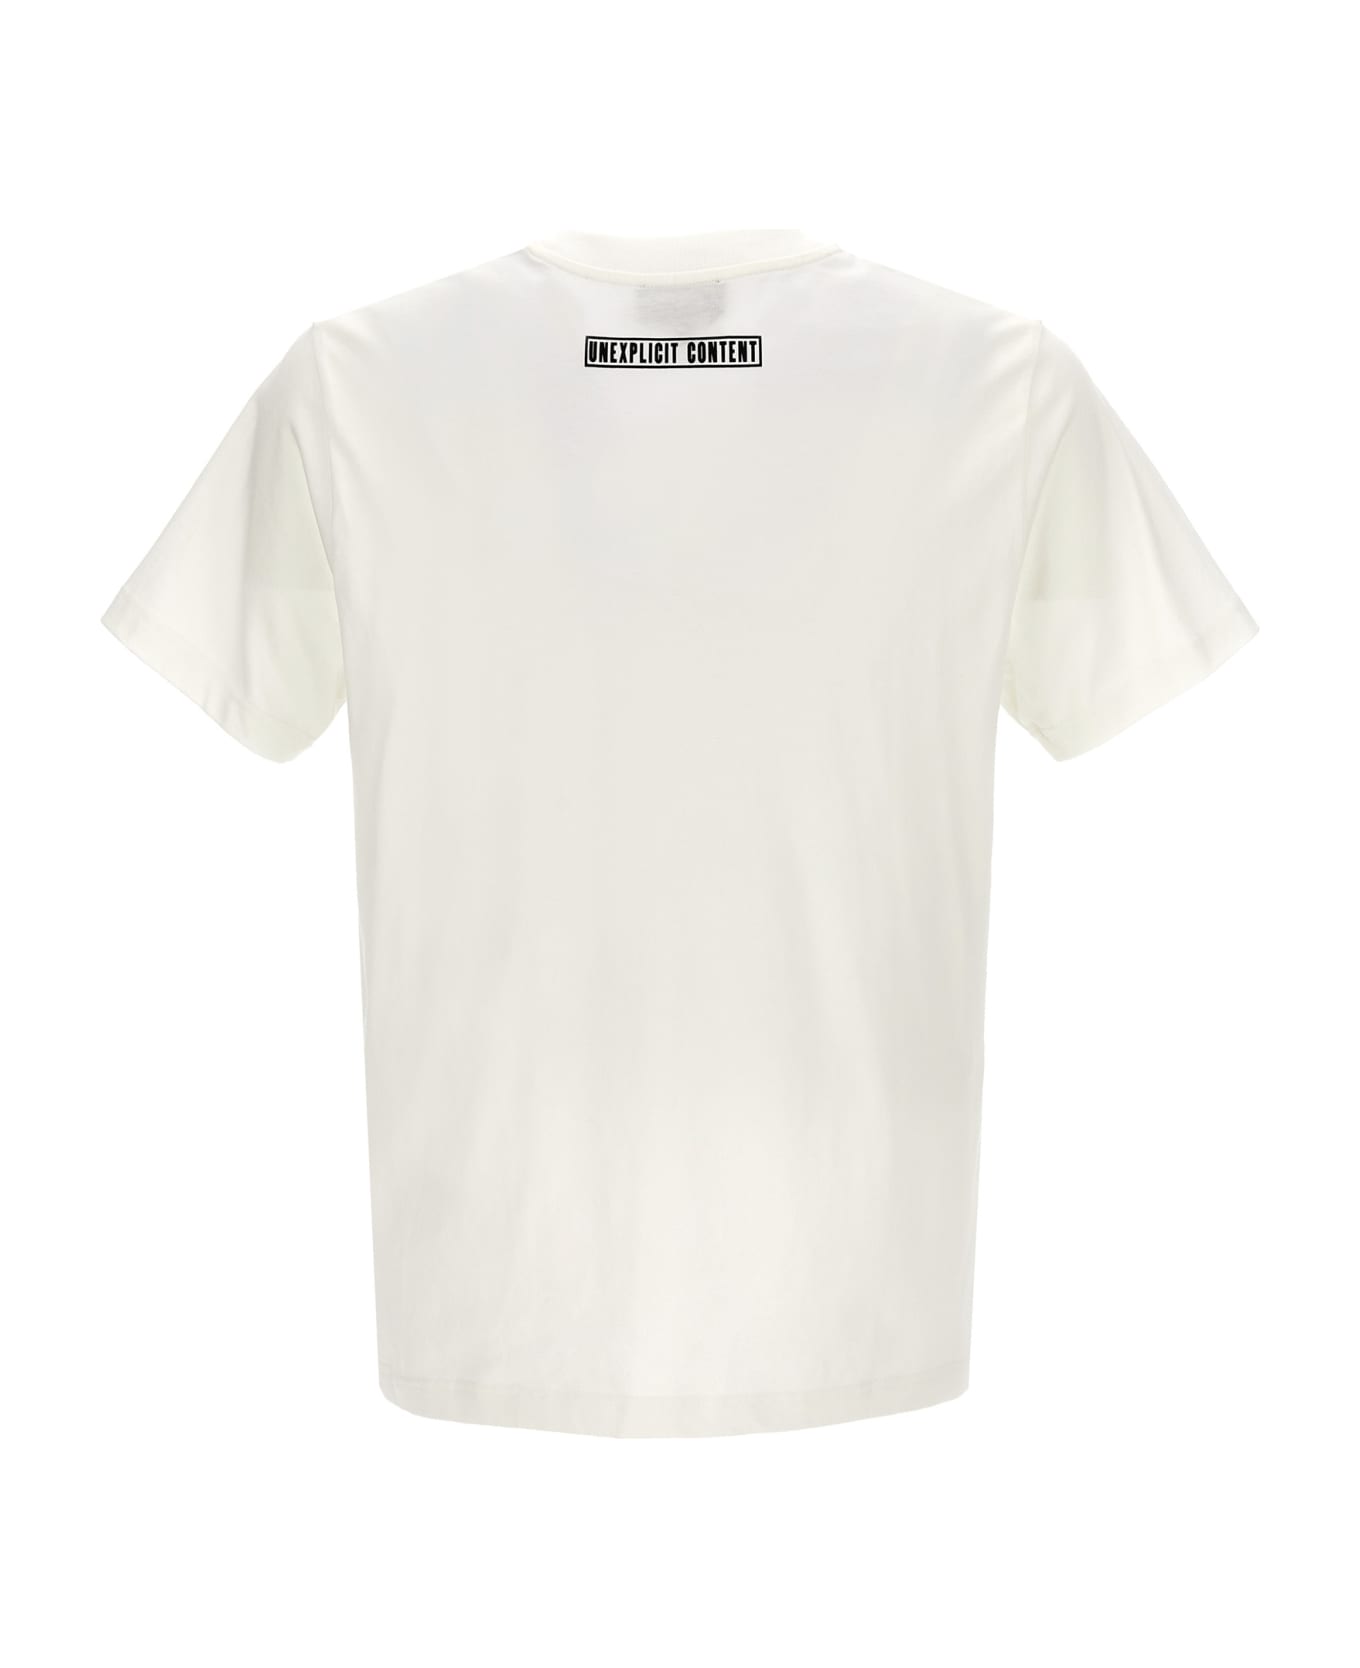 A.P.C. Jibe Cotton Crew Neck T-shirt - White